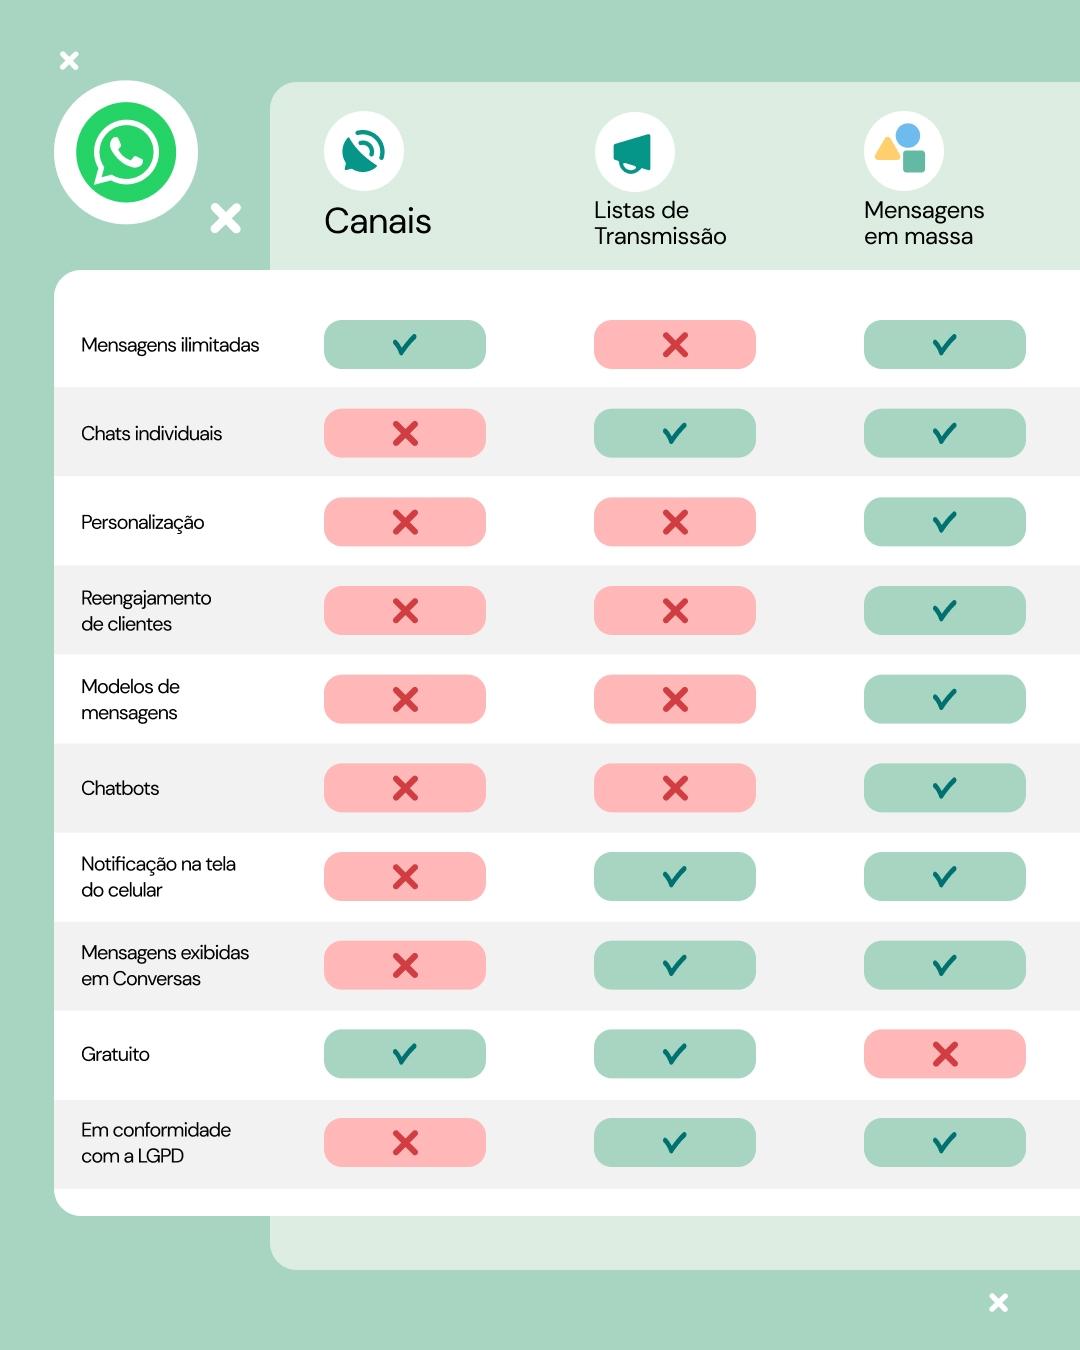 WhatsApp Channels Broadcast Campaigns Comparison Graphic - PT - 4-5 - 23cw39